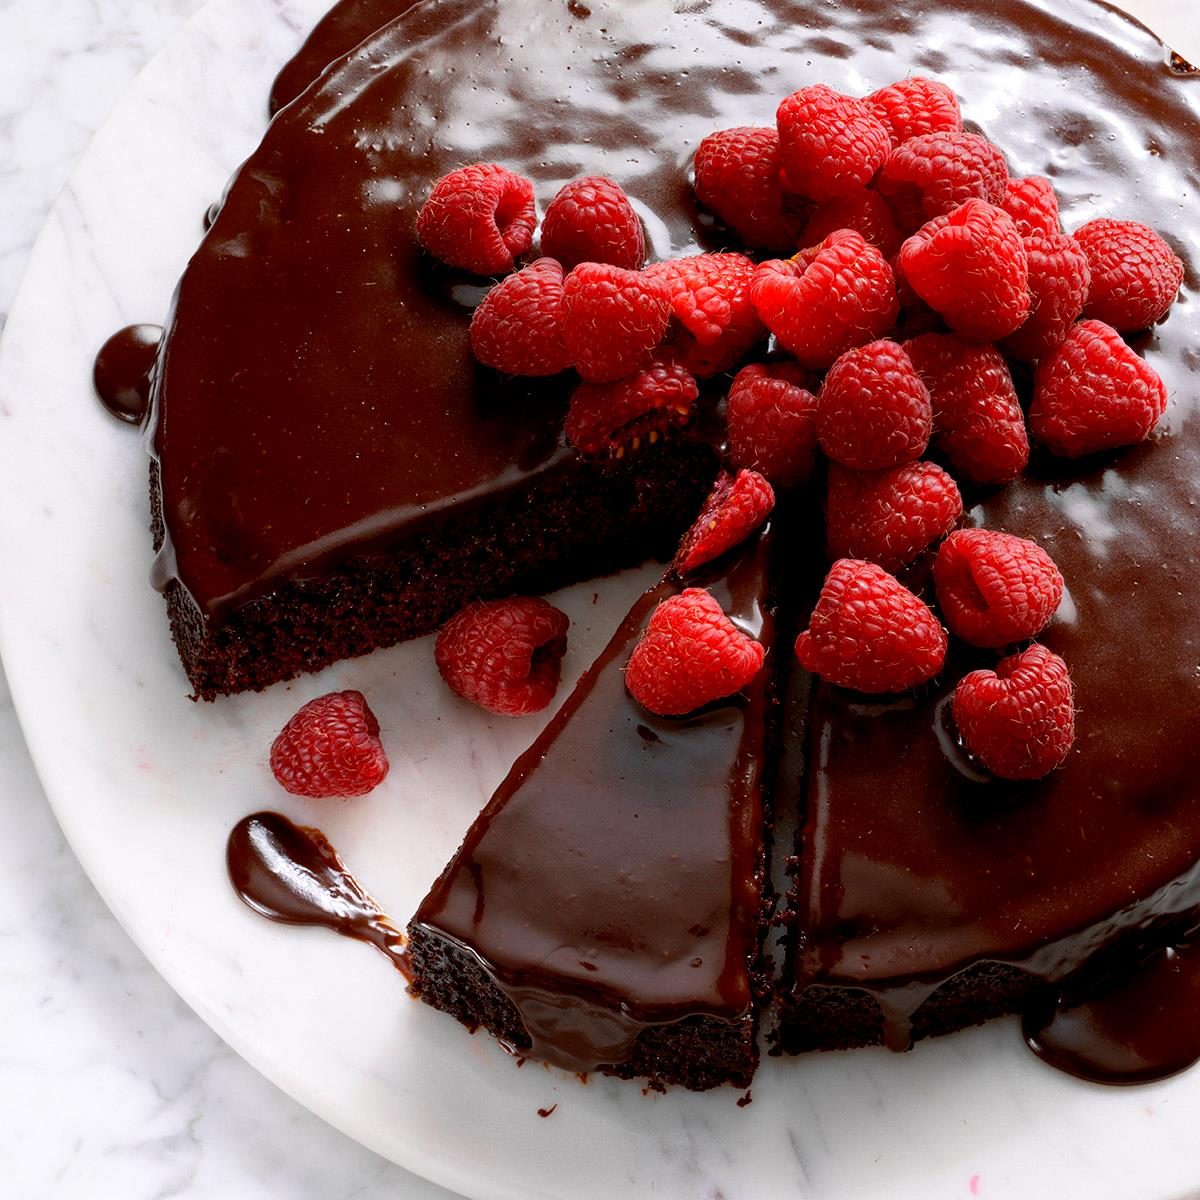 Ganache-Topped Chocolate Cake Recipe: How to Make It